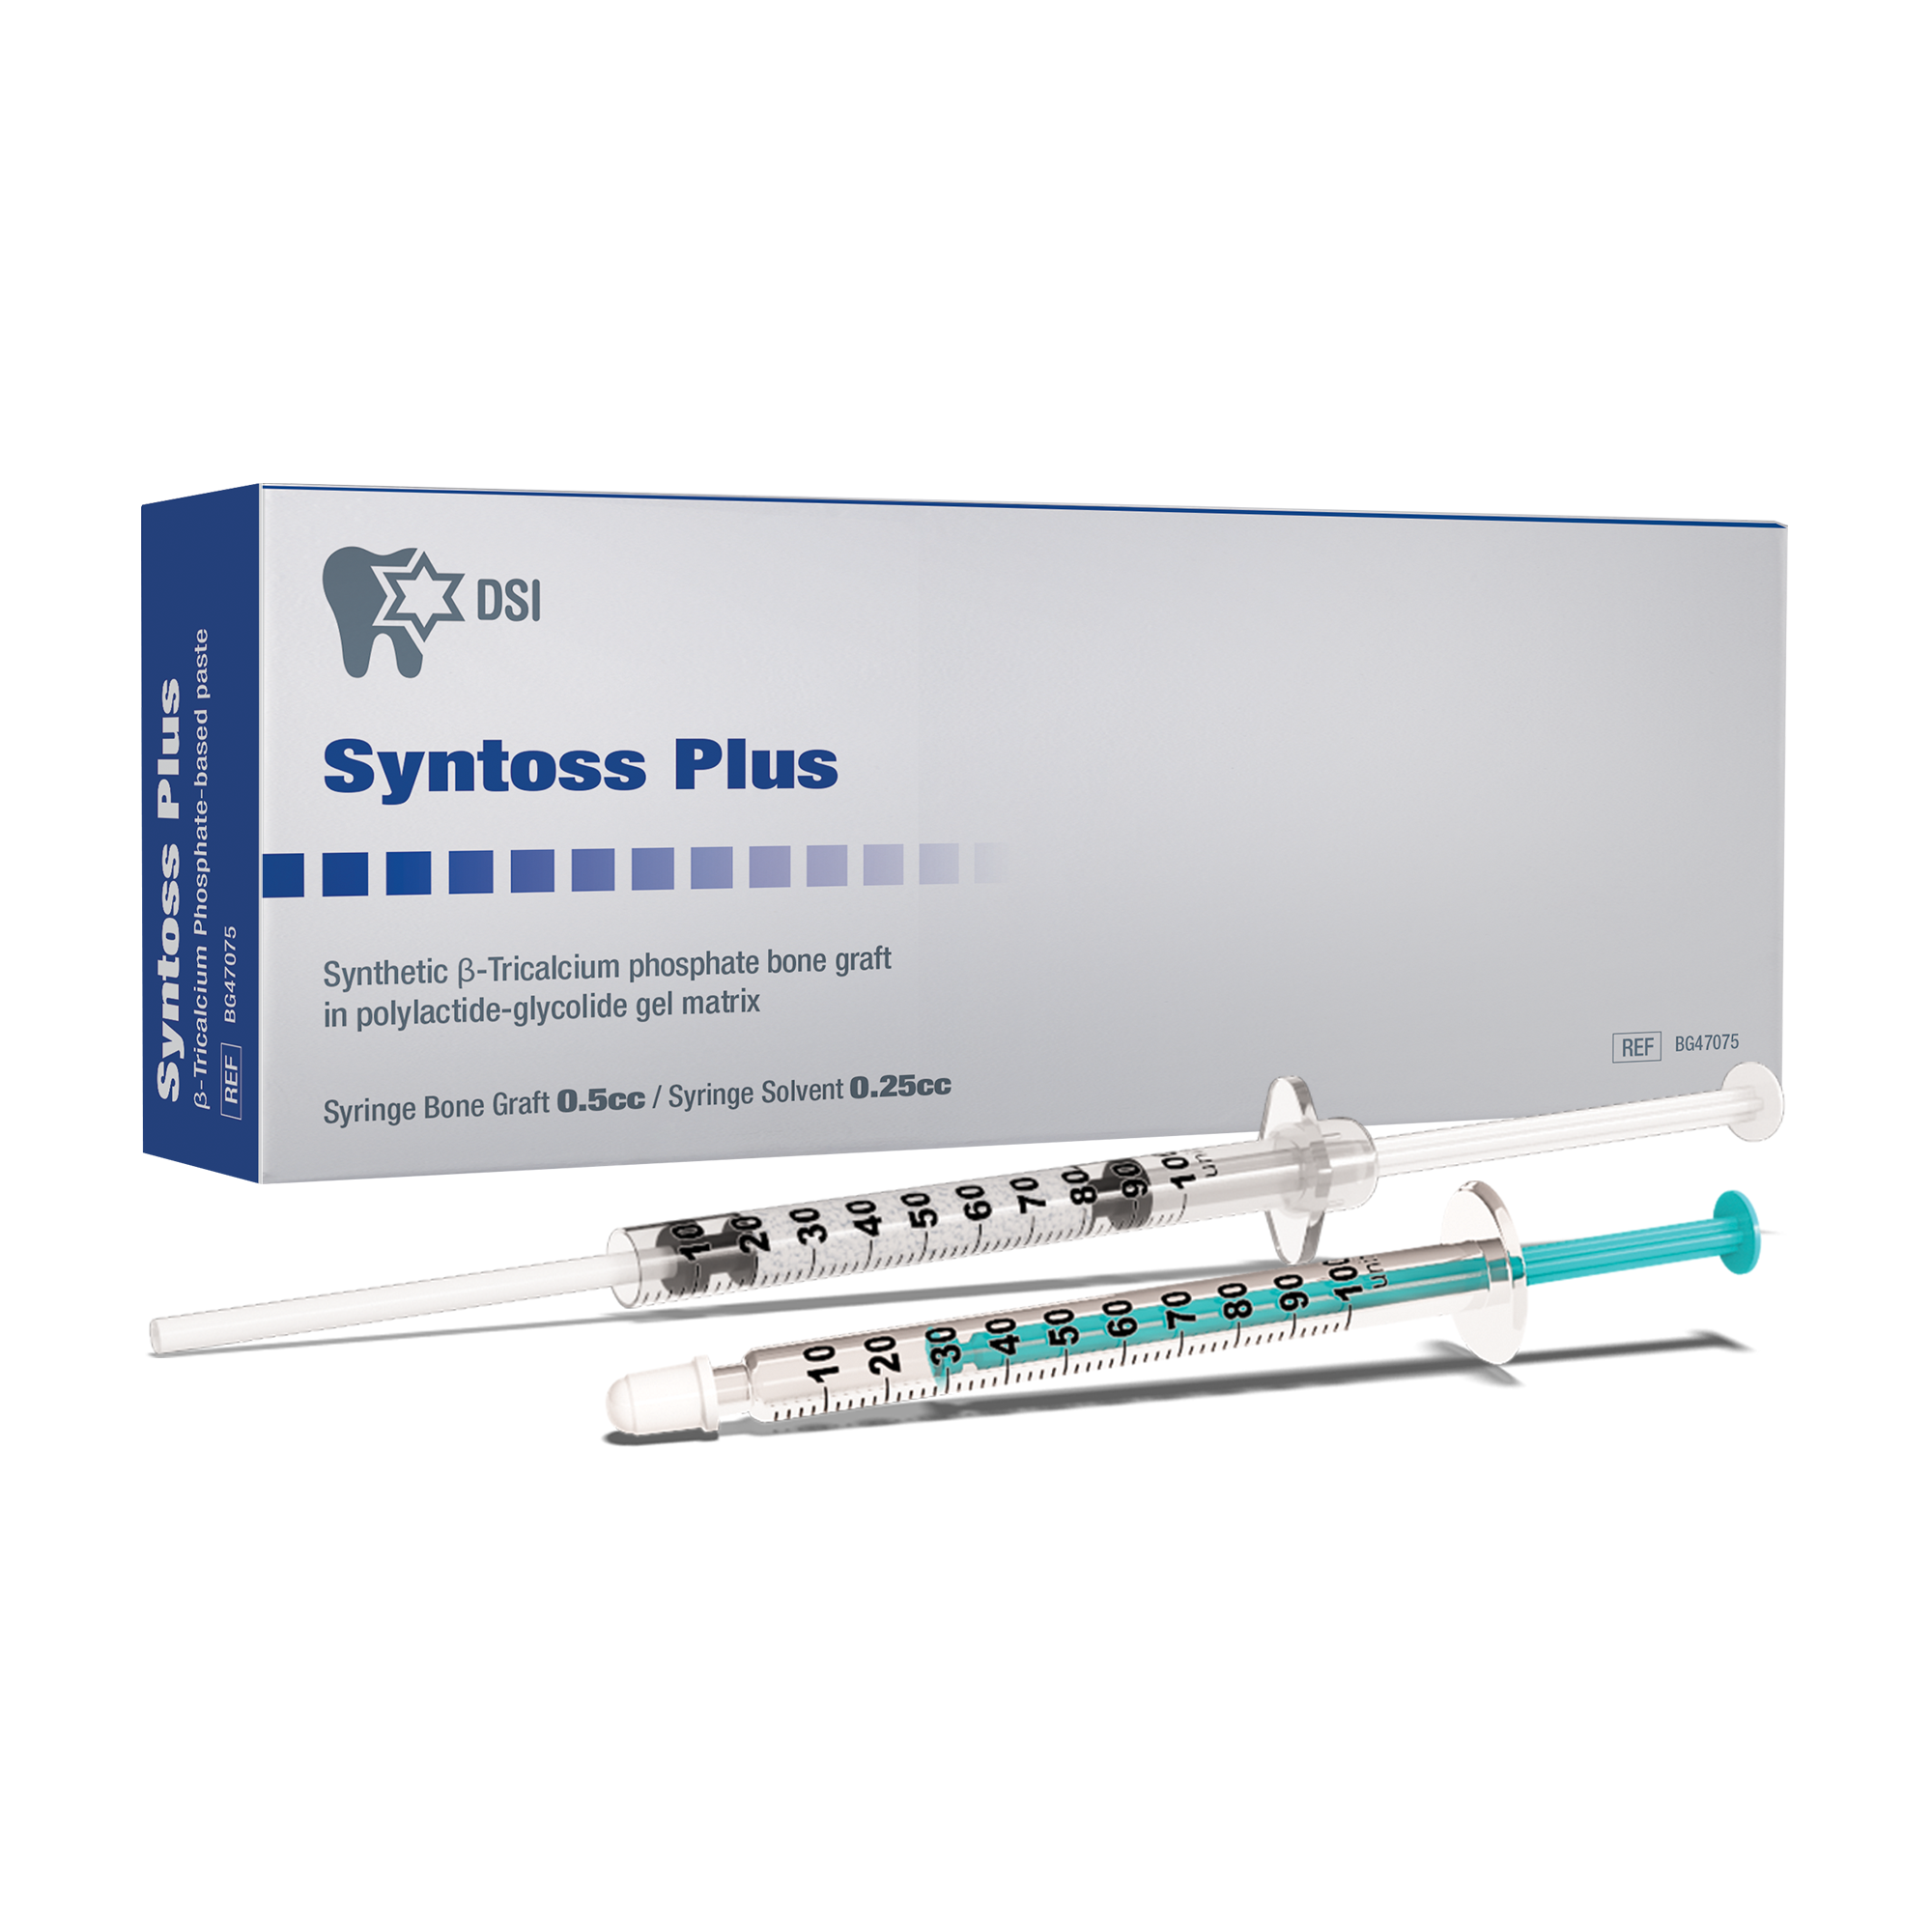 DSI Syntoss Plus Synthetic Bone bTCP Graft in Syringes Alloplast